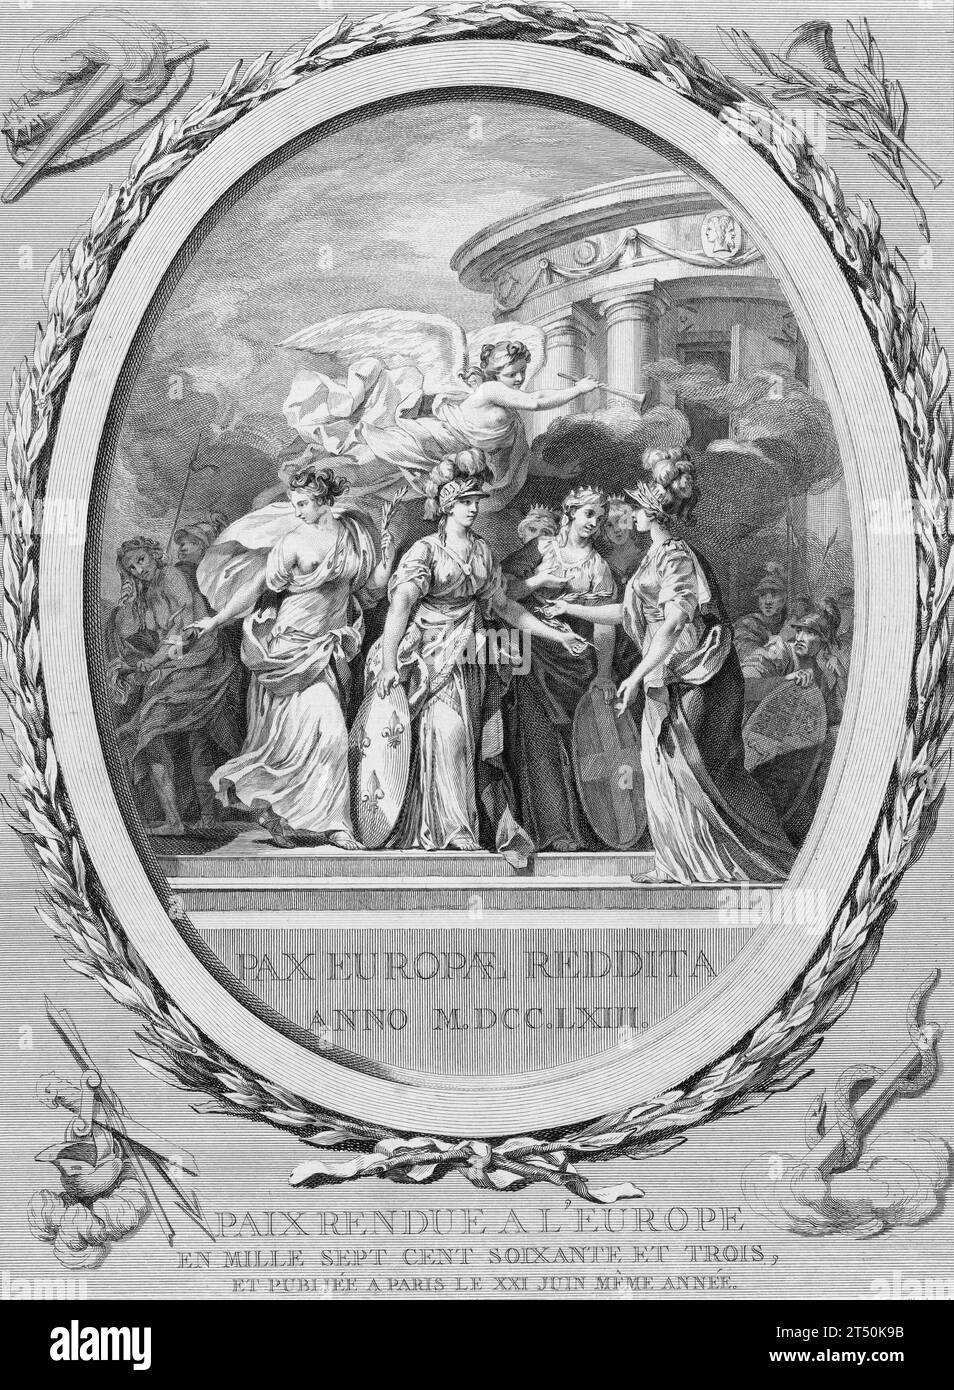 Vertrag von Paris, 1763. Allegorie des Pariser Friedens, Paix rendue à l'Europe. Stockfoto